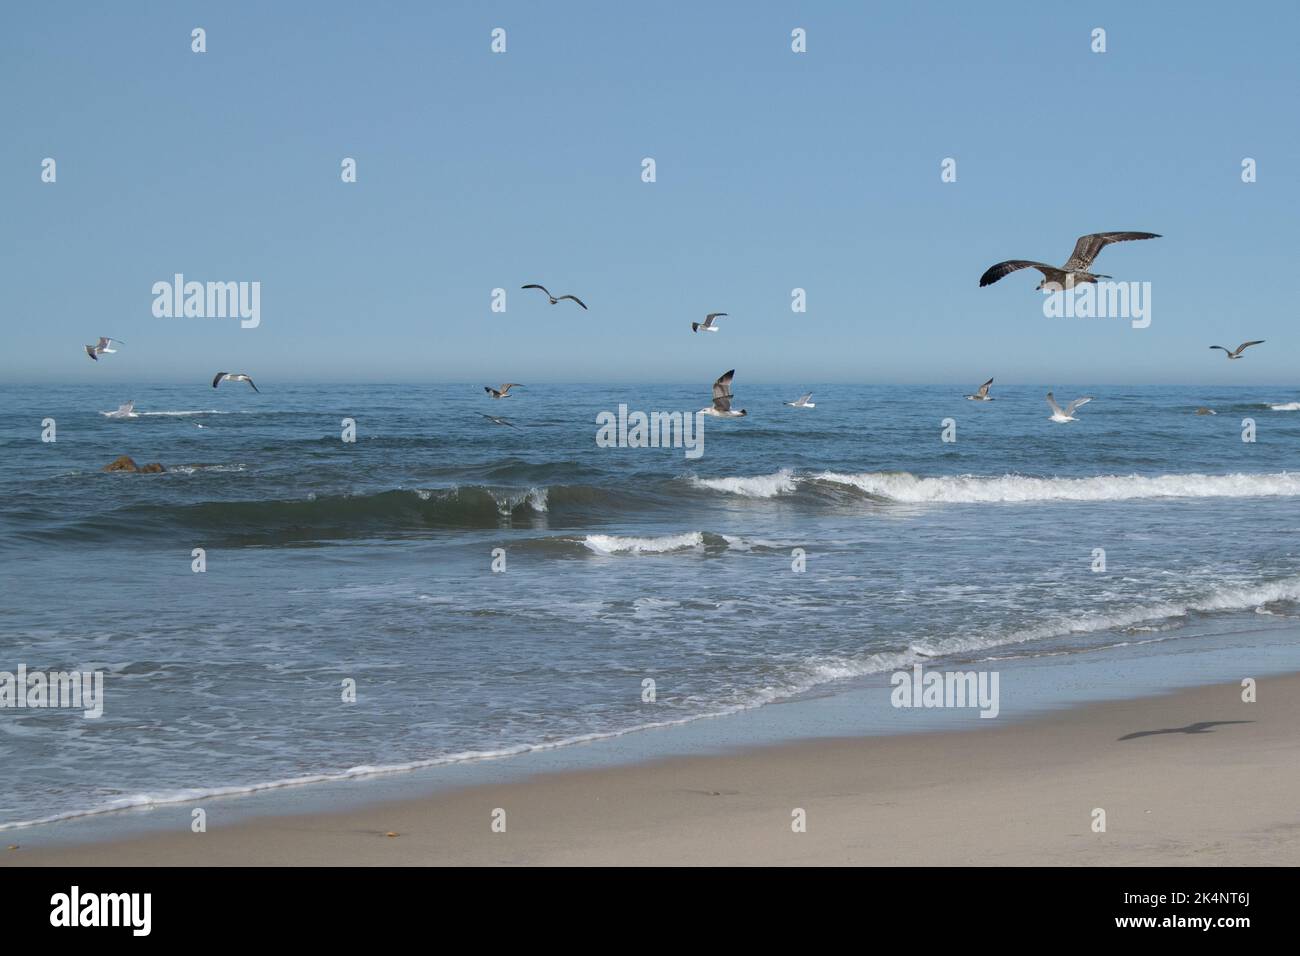 Seagulls flying over the sandbar beach. Marine theme, sea life, ocean views and landscapes. Hollydays on Summer. Stock Photo